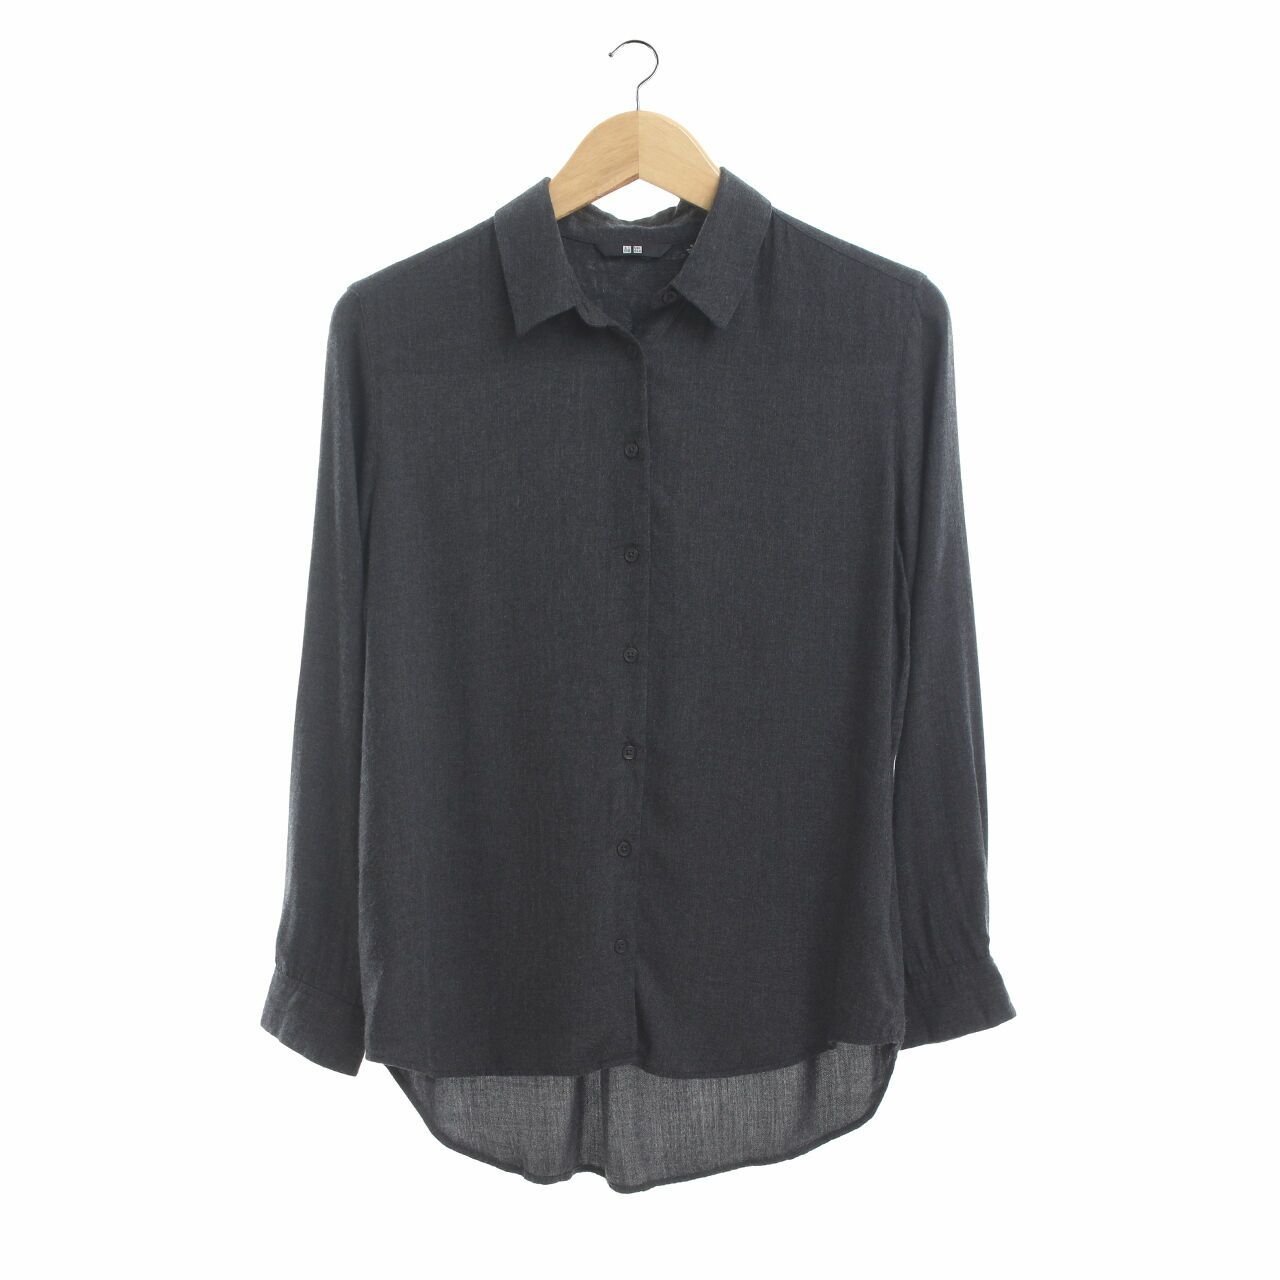 UNIQLO Dark Grey Long Sleeve Shirt